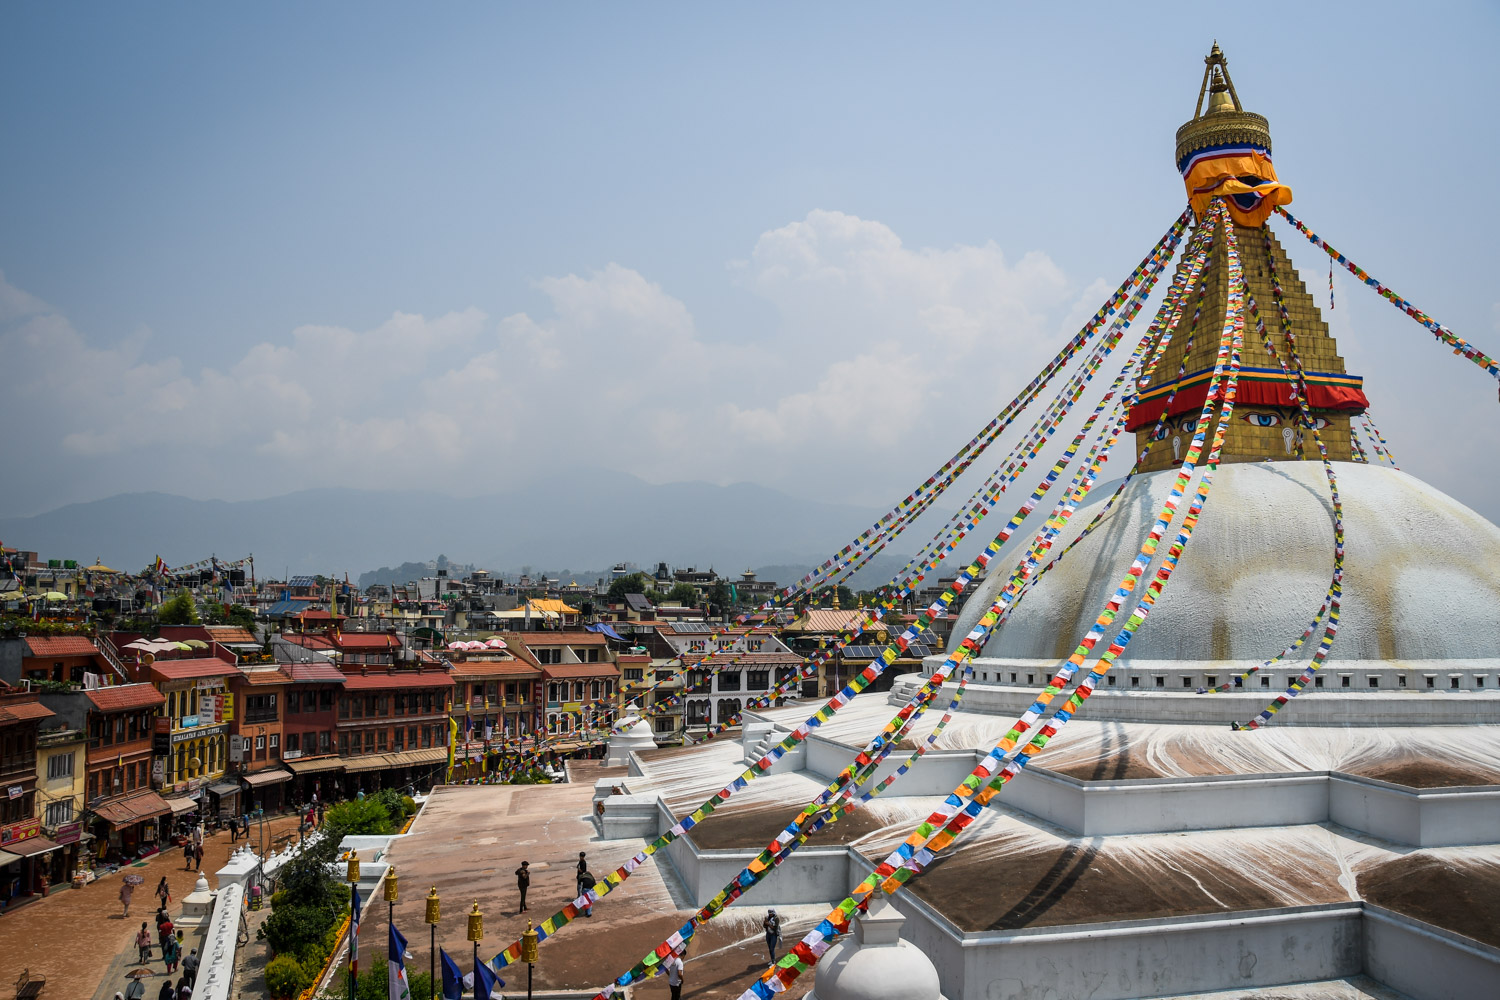 best travel guide nepal